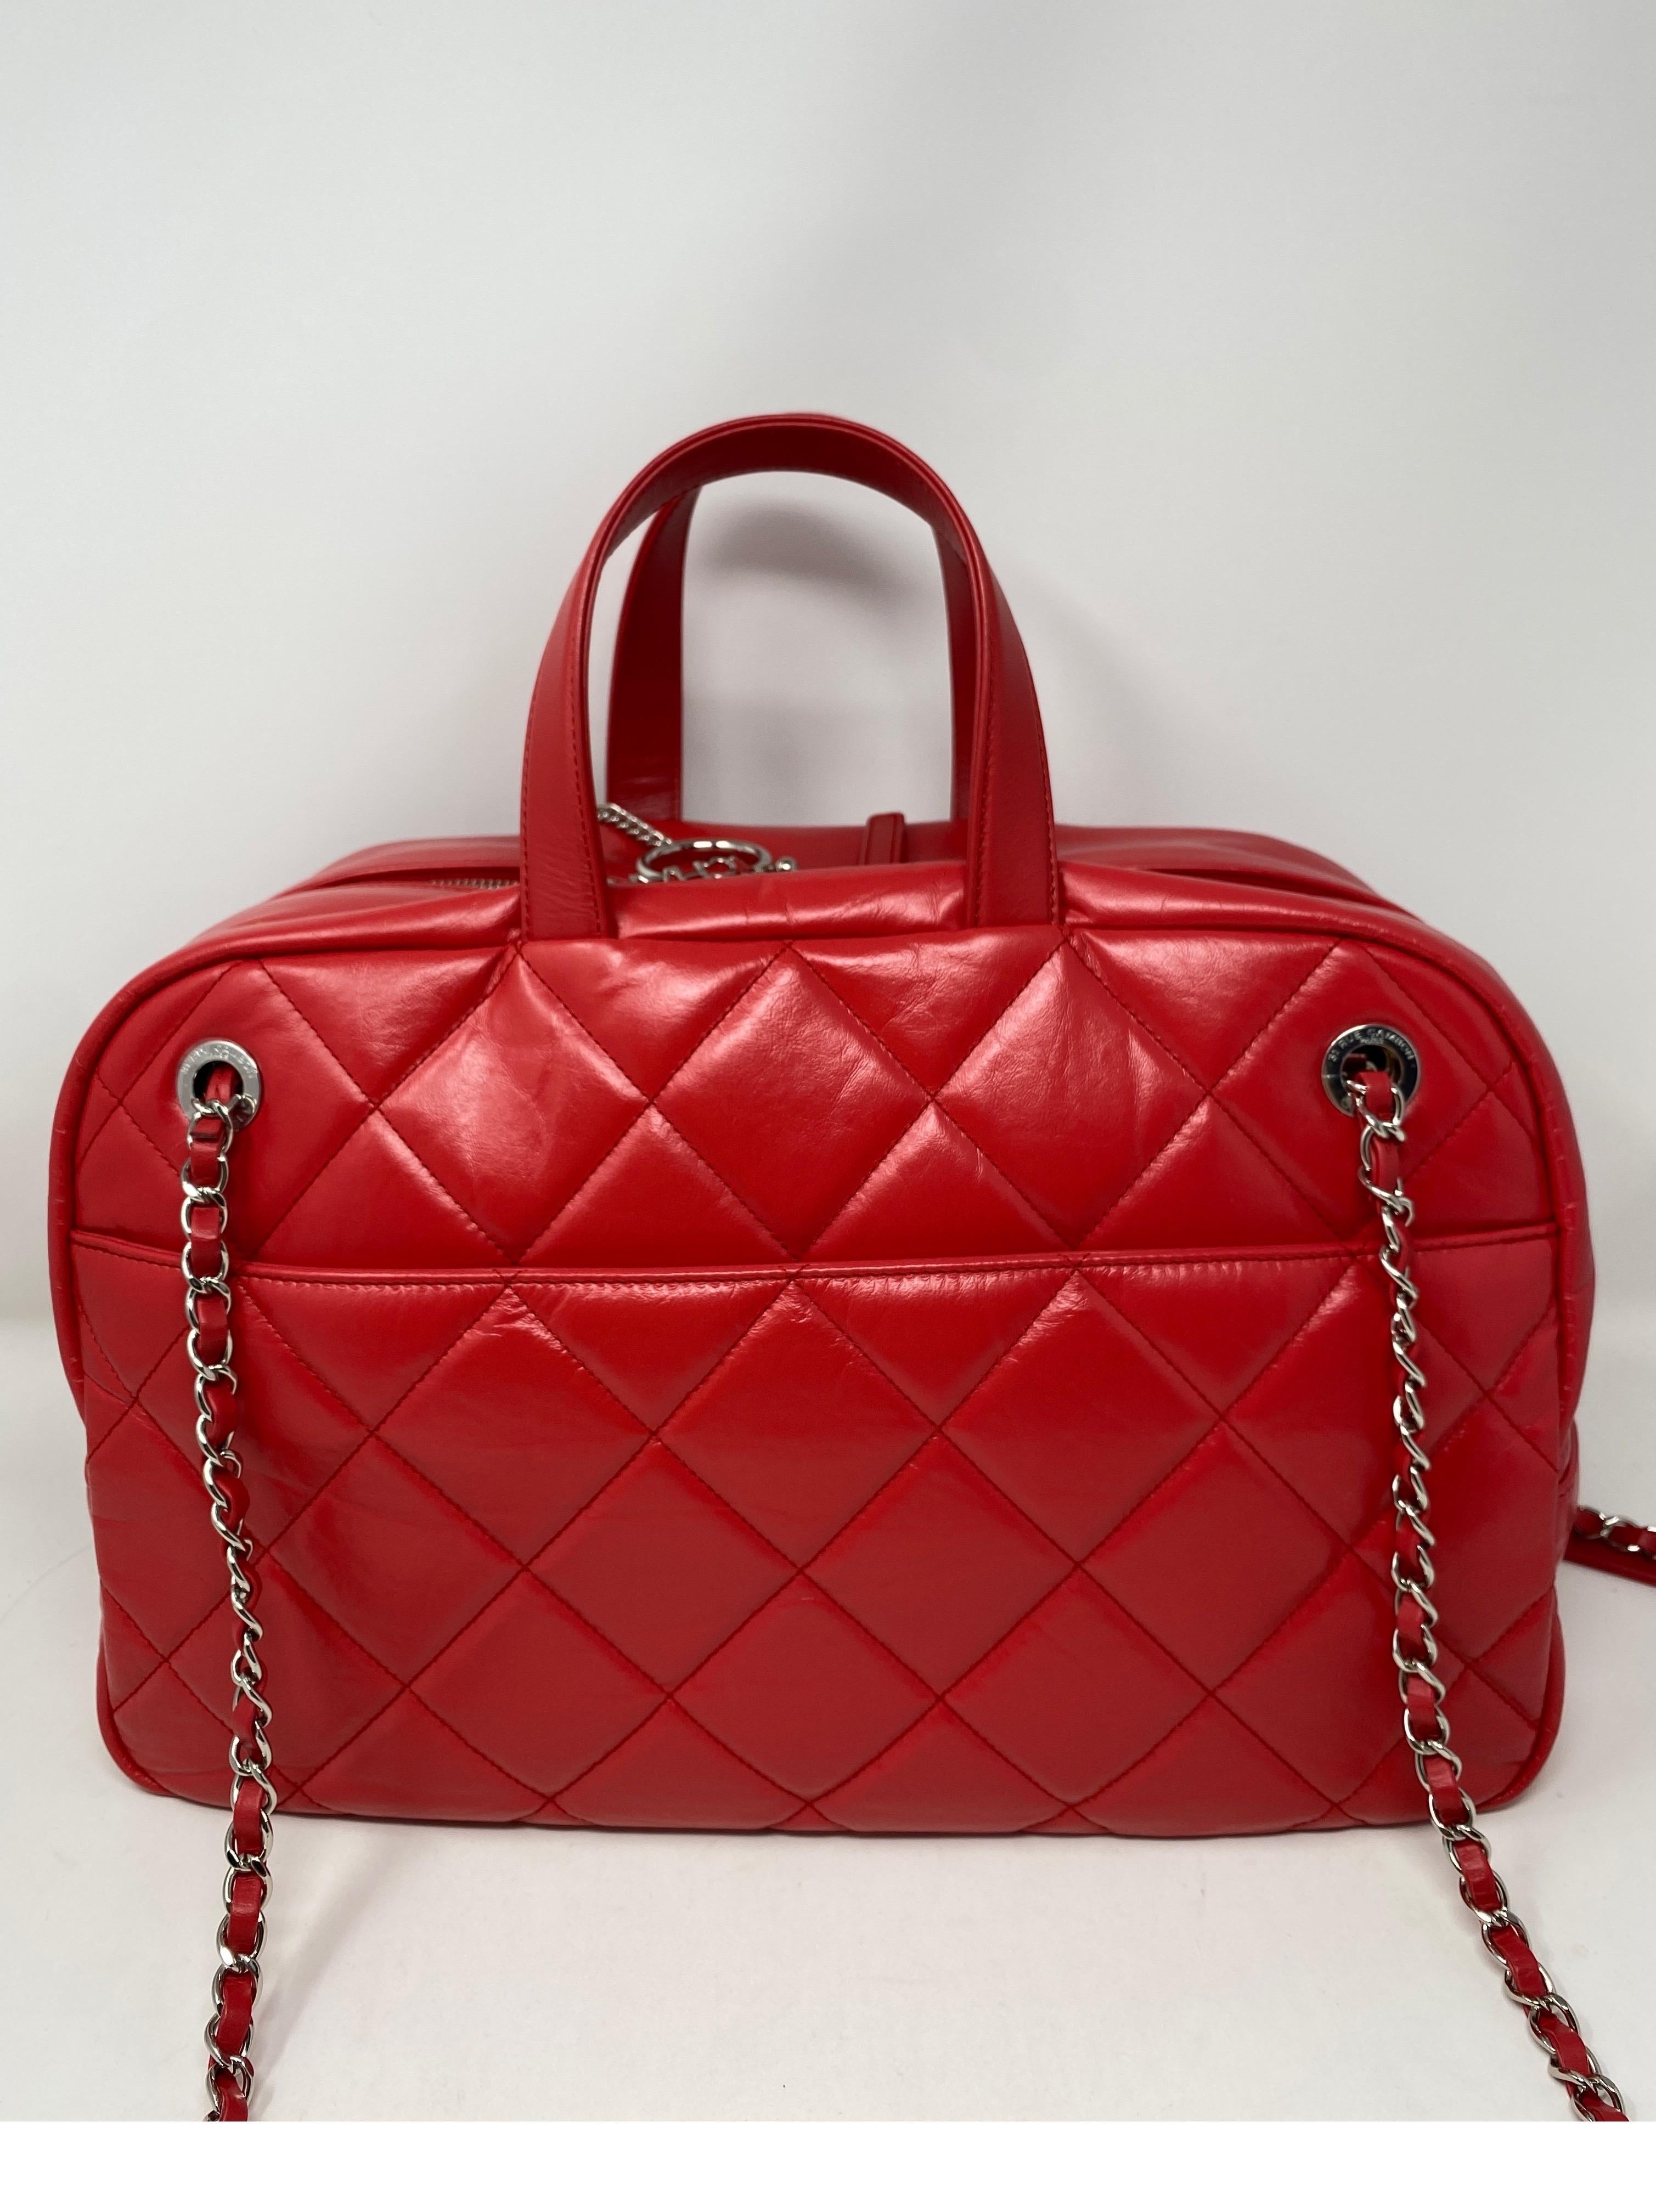 Chanel Large Red Bowler Bag  5